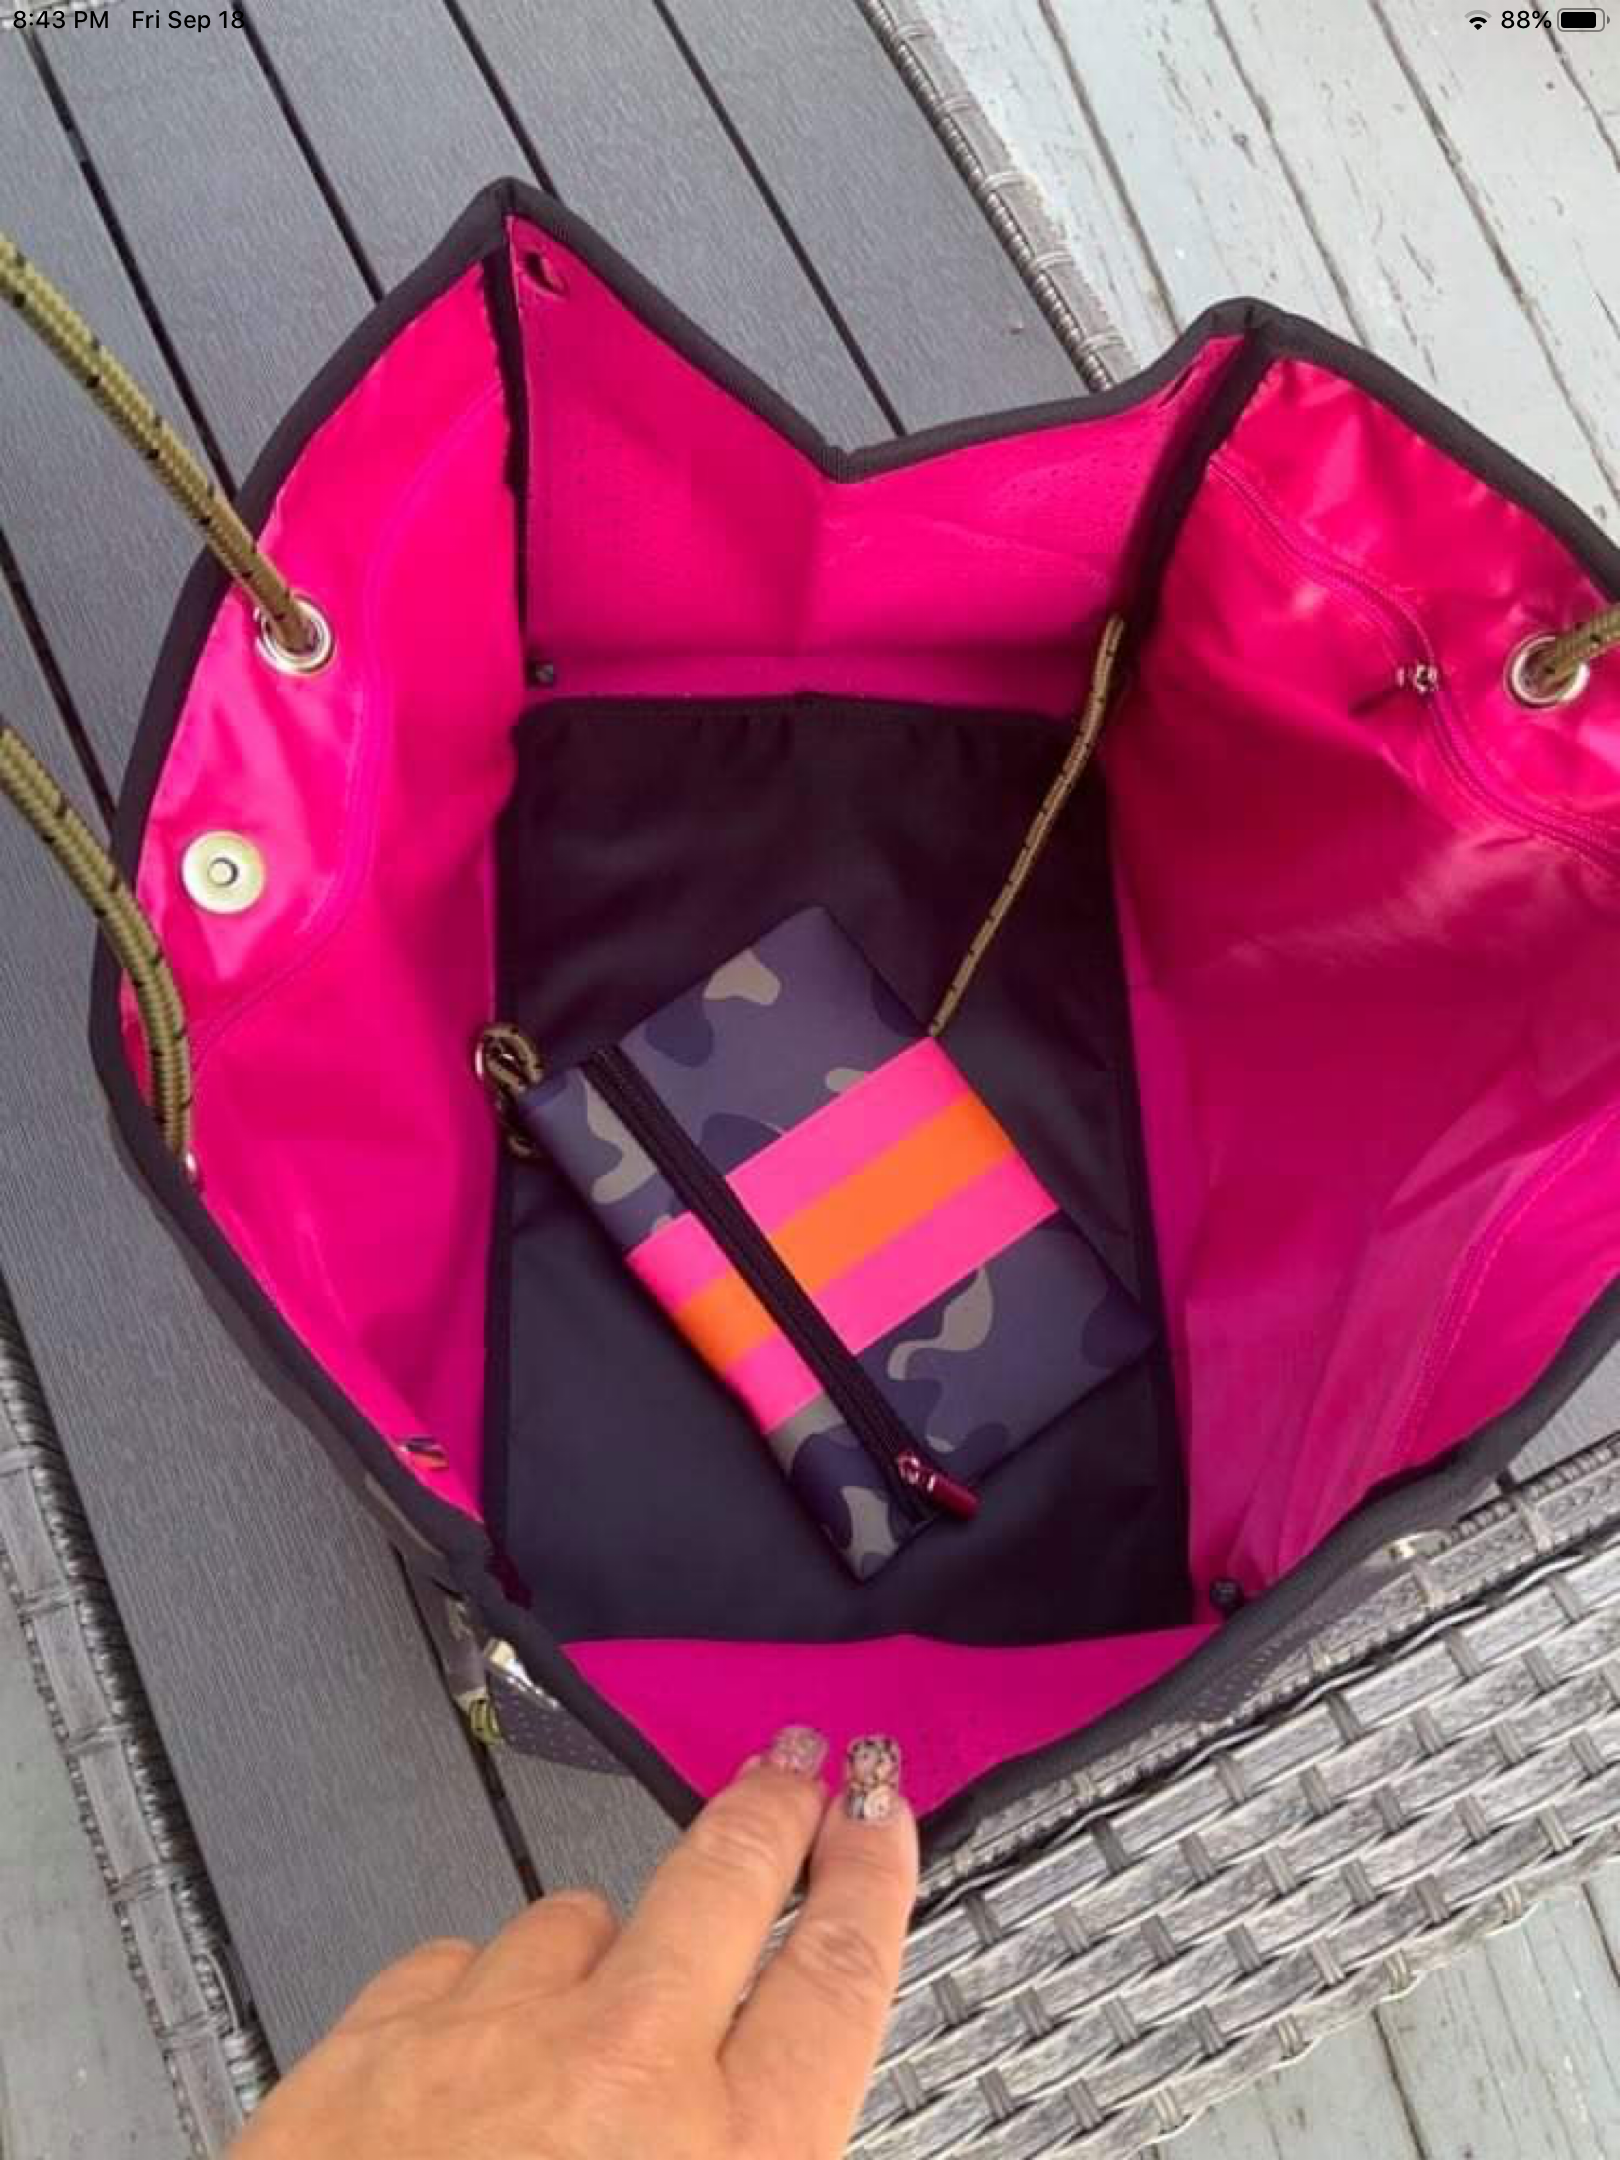 Green Camo with Neon Orange/Pink Stripe Neoprene Tote bag 🧡💗 – Peace Love  Fashion